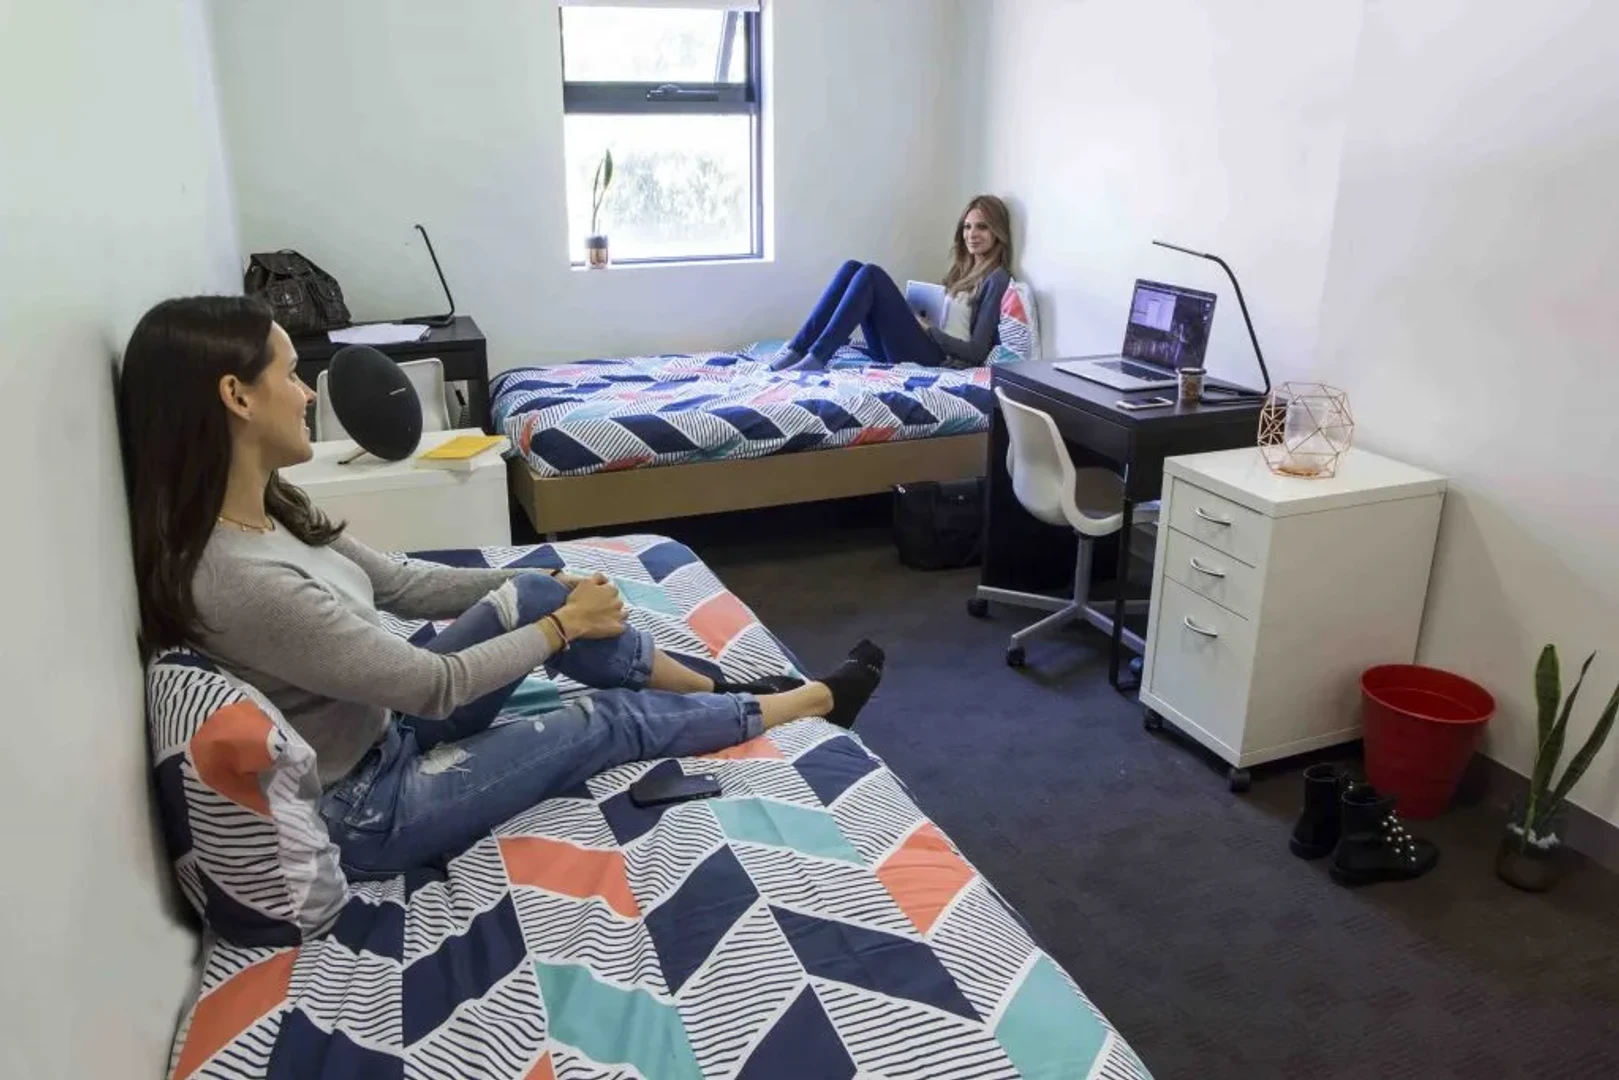 Shared room in 3-bedroom flat Melbourne